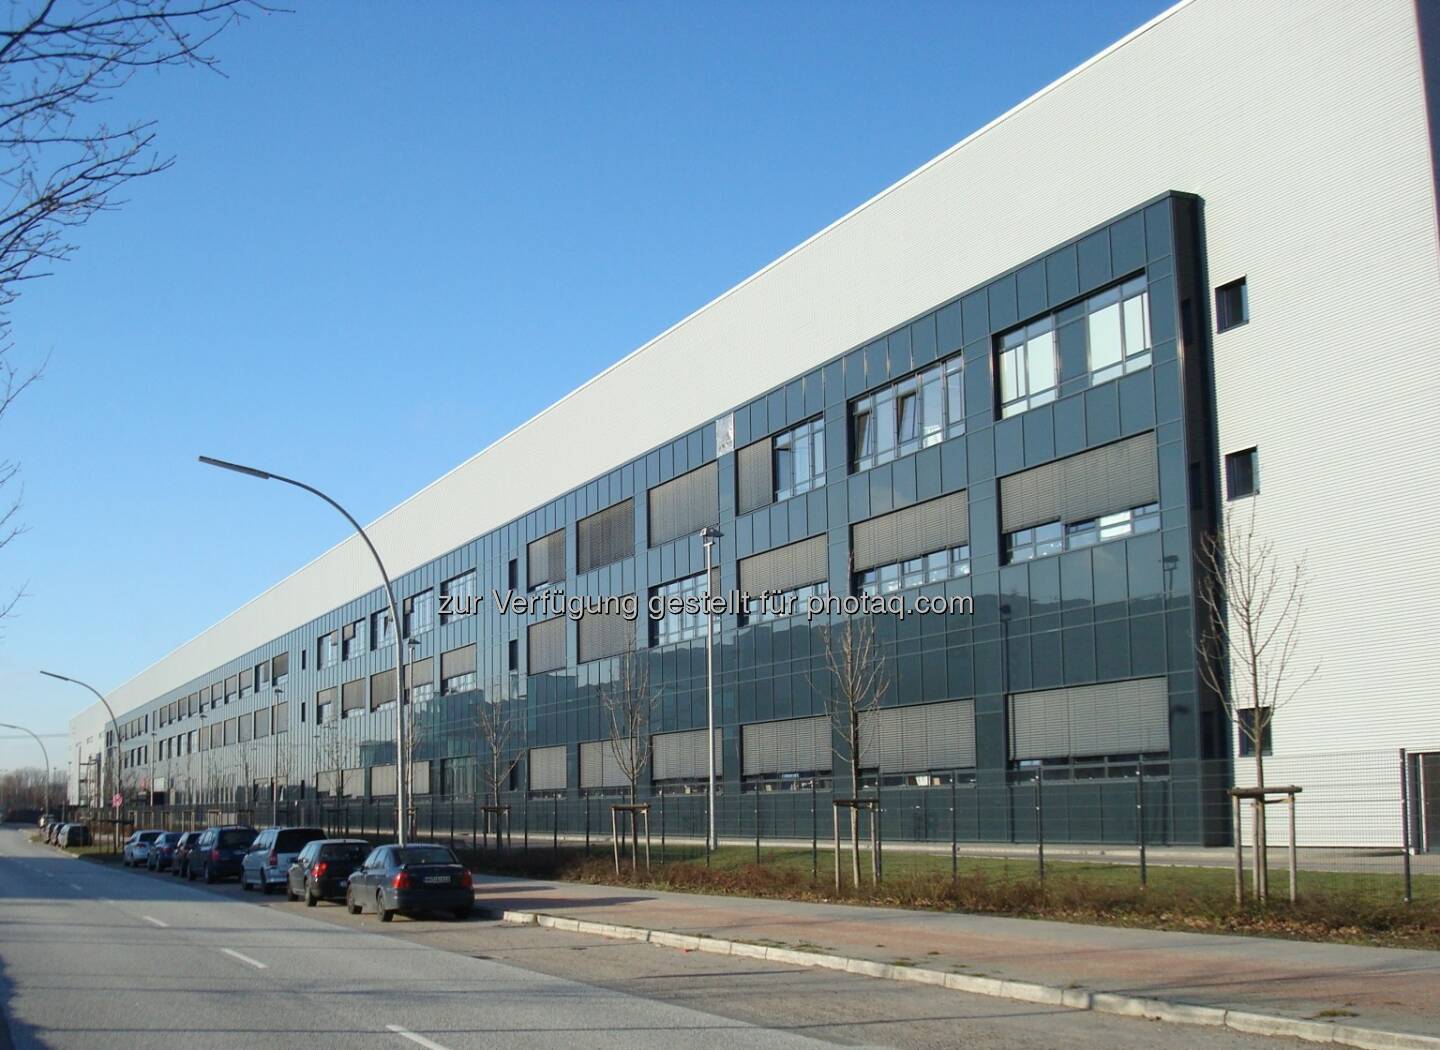 CA Immo verkauft H&M-Logistikzentrum in Hamburg (Bild: CA Immo)